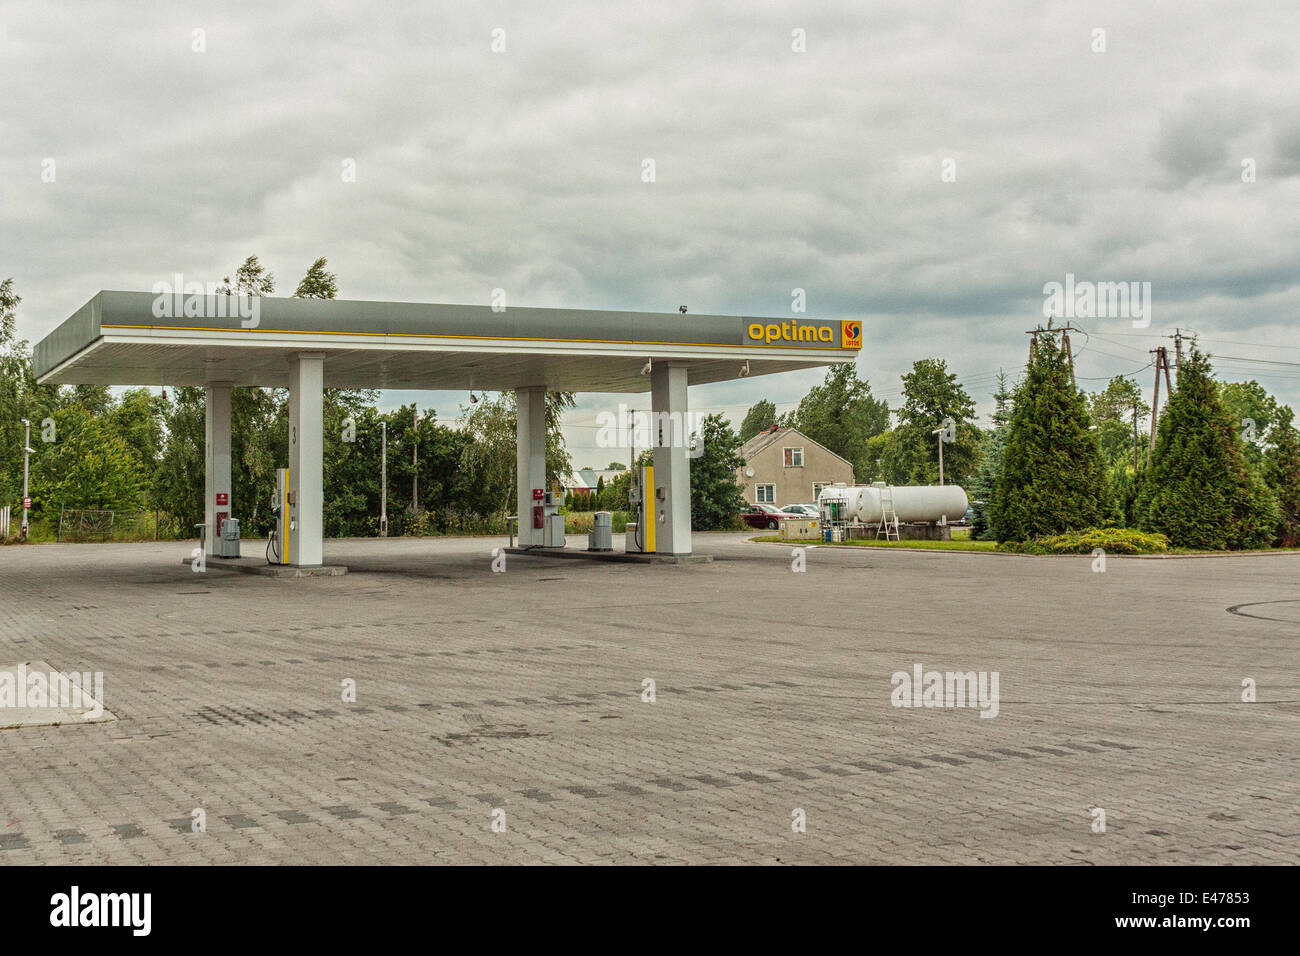 Lotos Optima petrol station, Poland Stock Photo